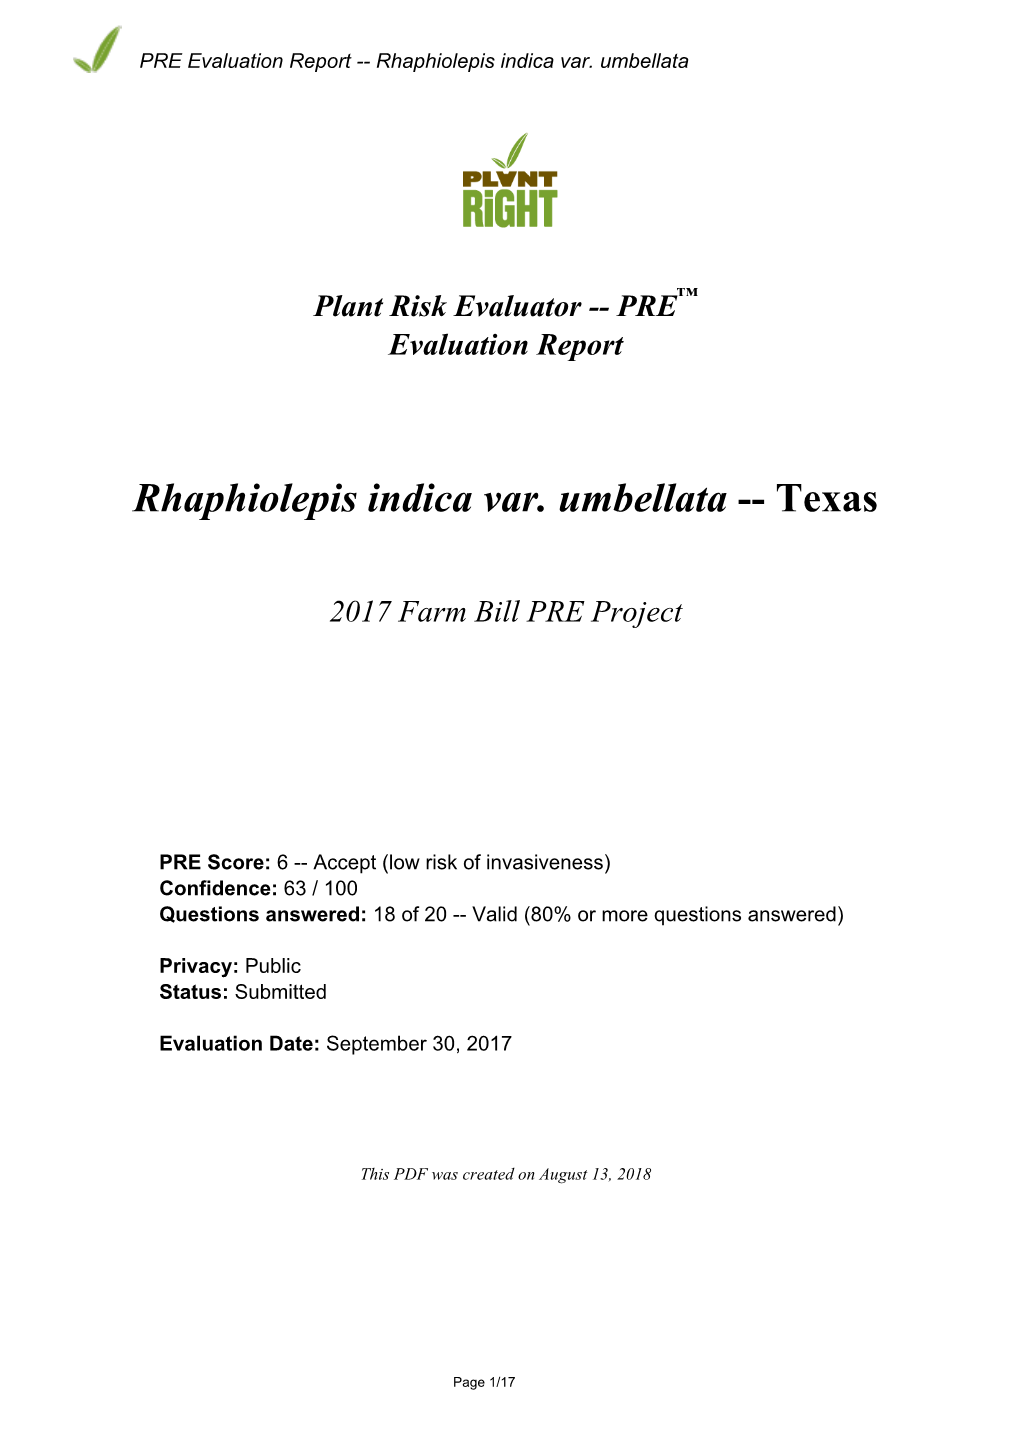 PRE Evaluation Report for Rhaphiolepis Indica Var. Umbellata